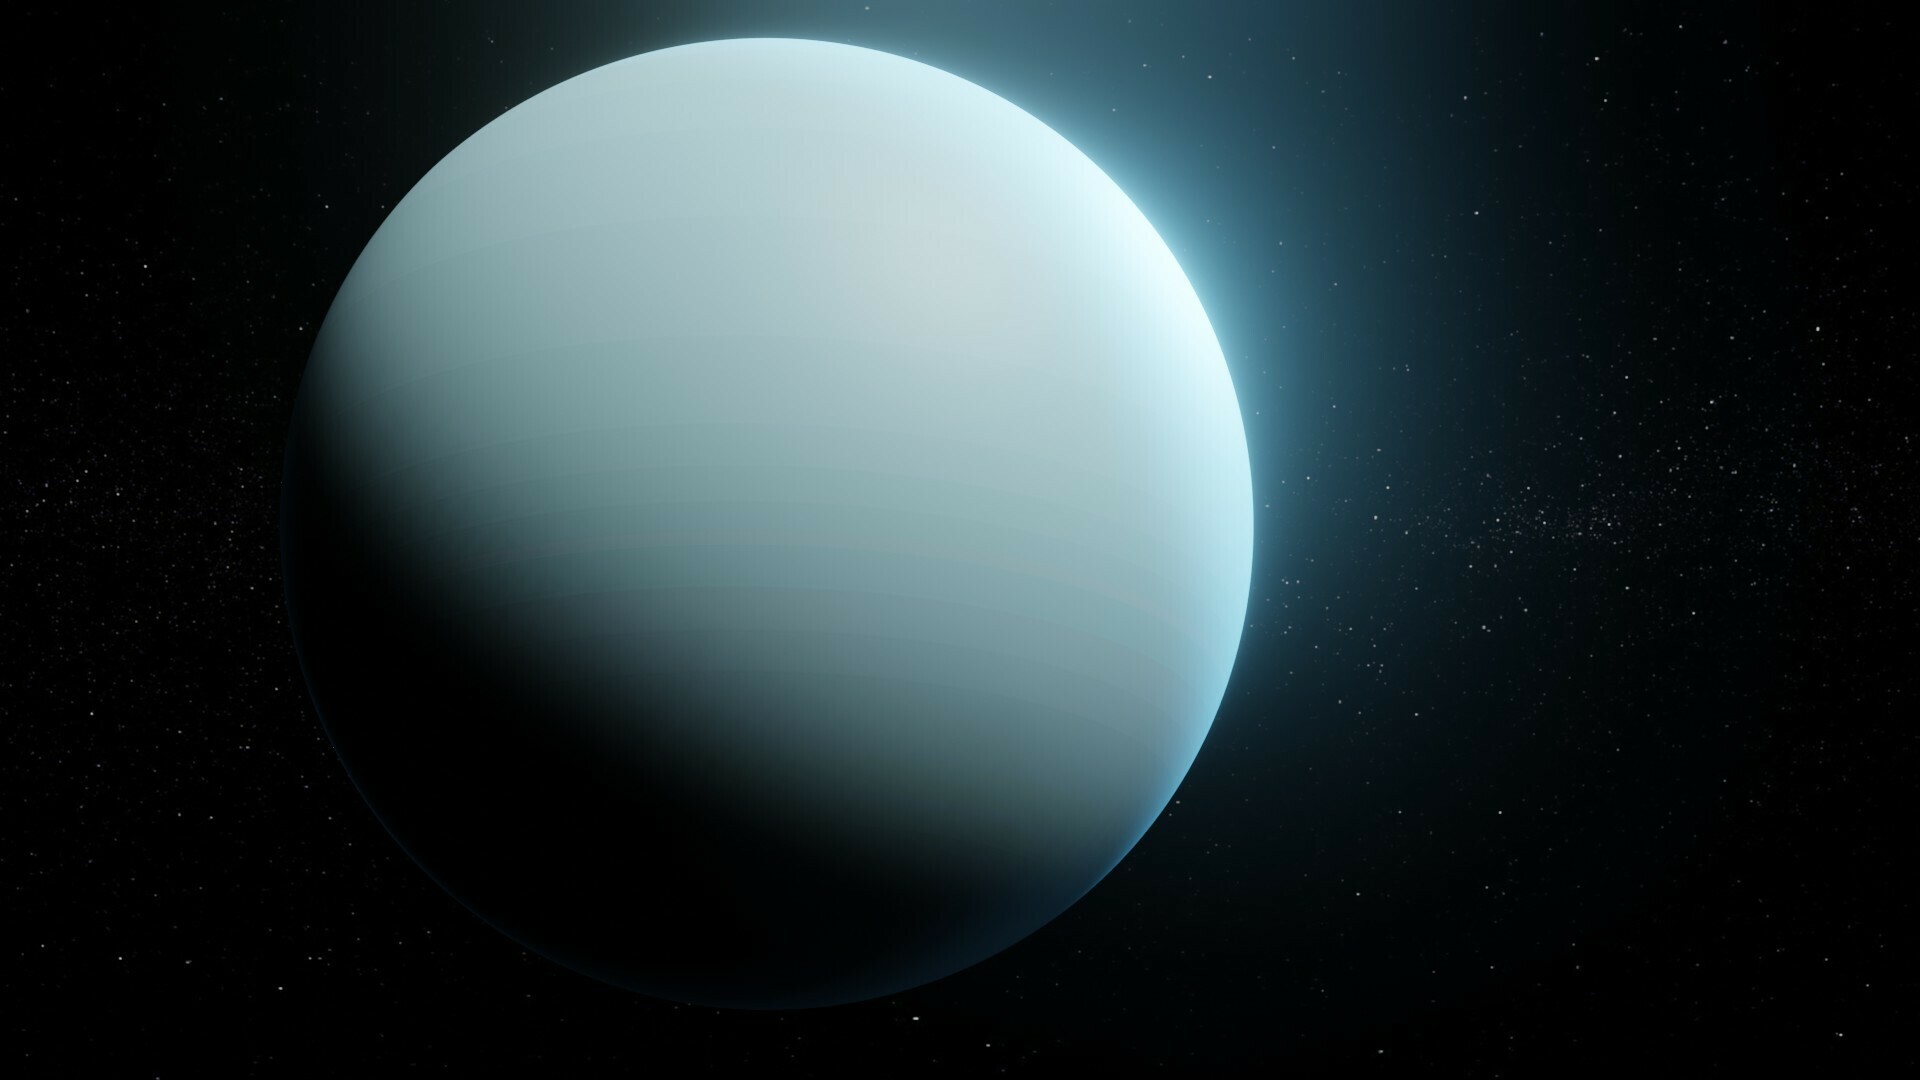 Uranus: The coldest planet in our Solar System, Void, Orbit, Milky Way. 1920x1080 Full HD Wallpaper.